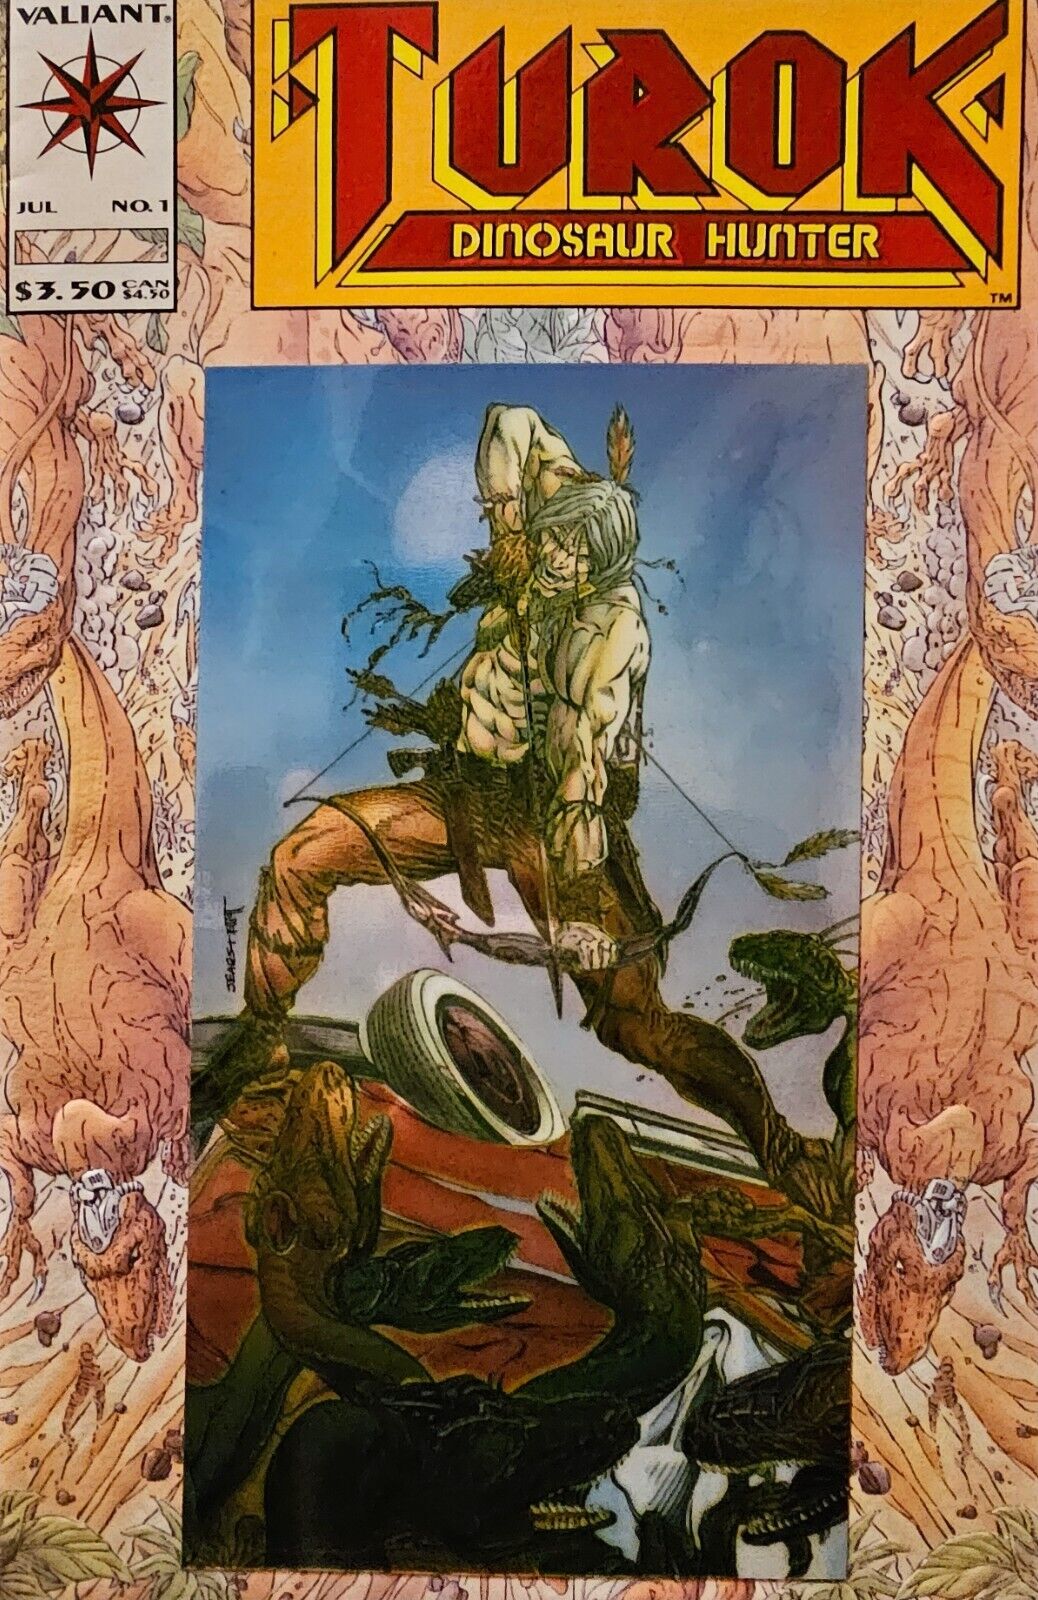 Turok Dinosaur Hunter #1 (Jul 1993, Valiant) Comic Book